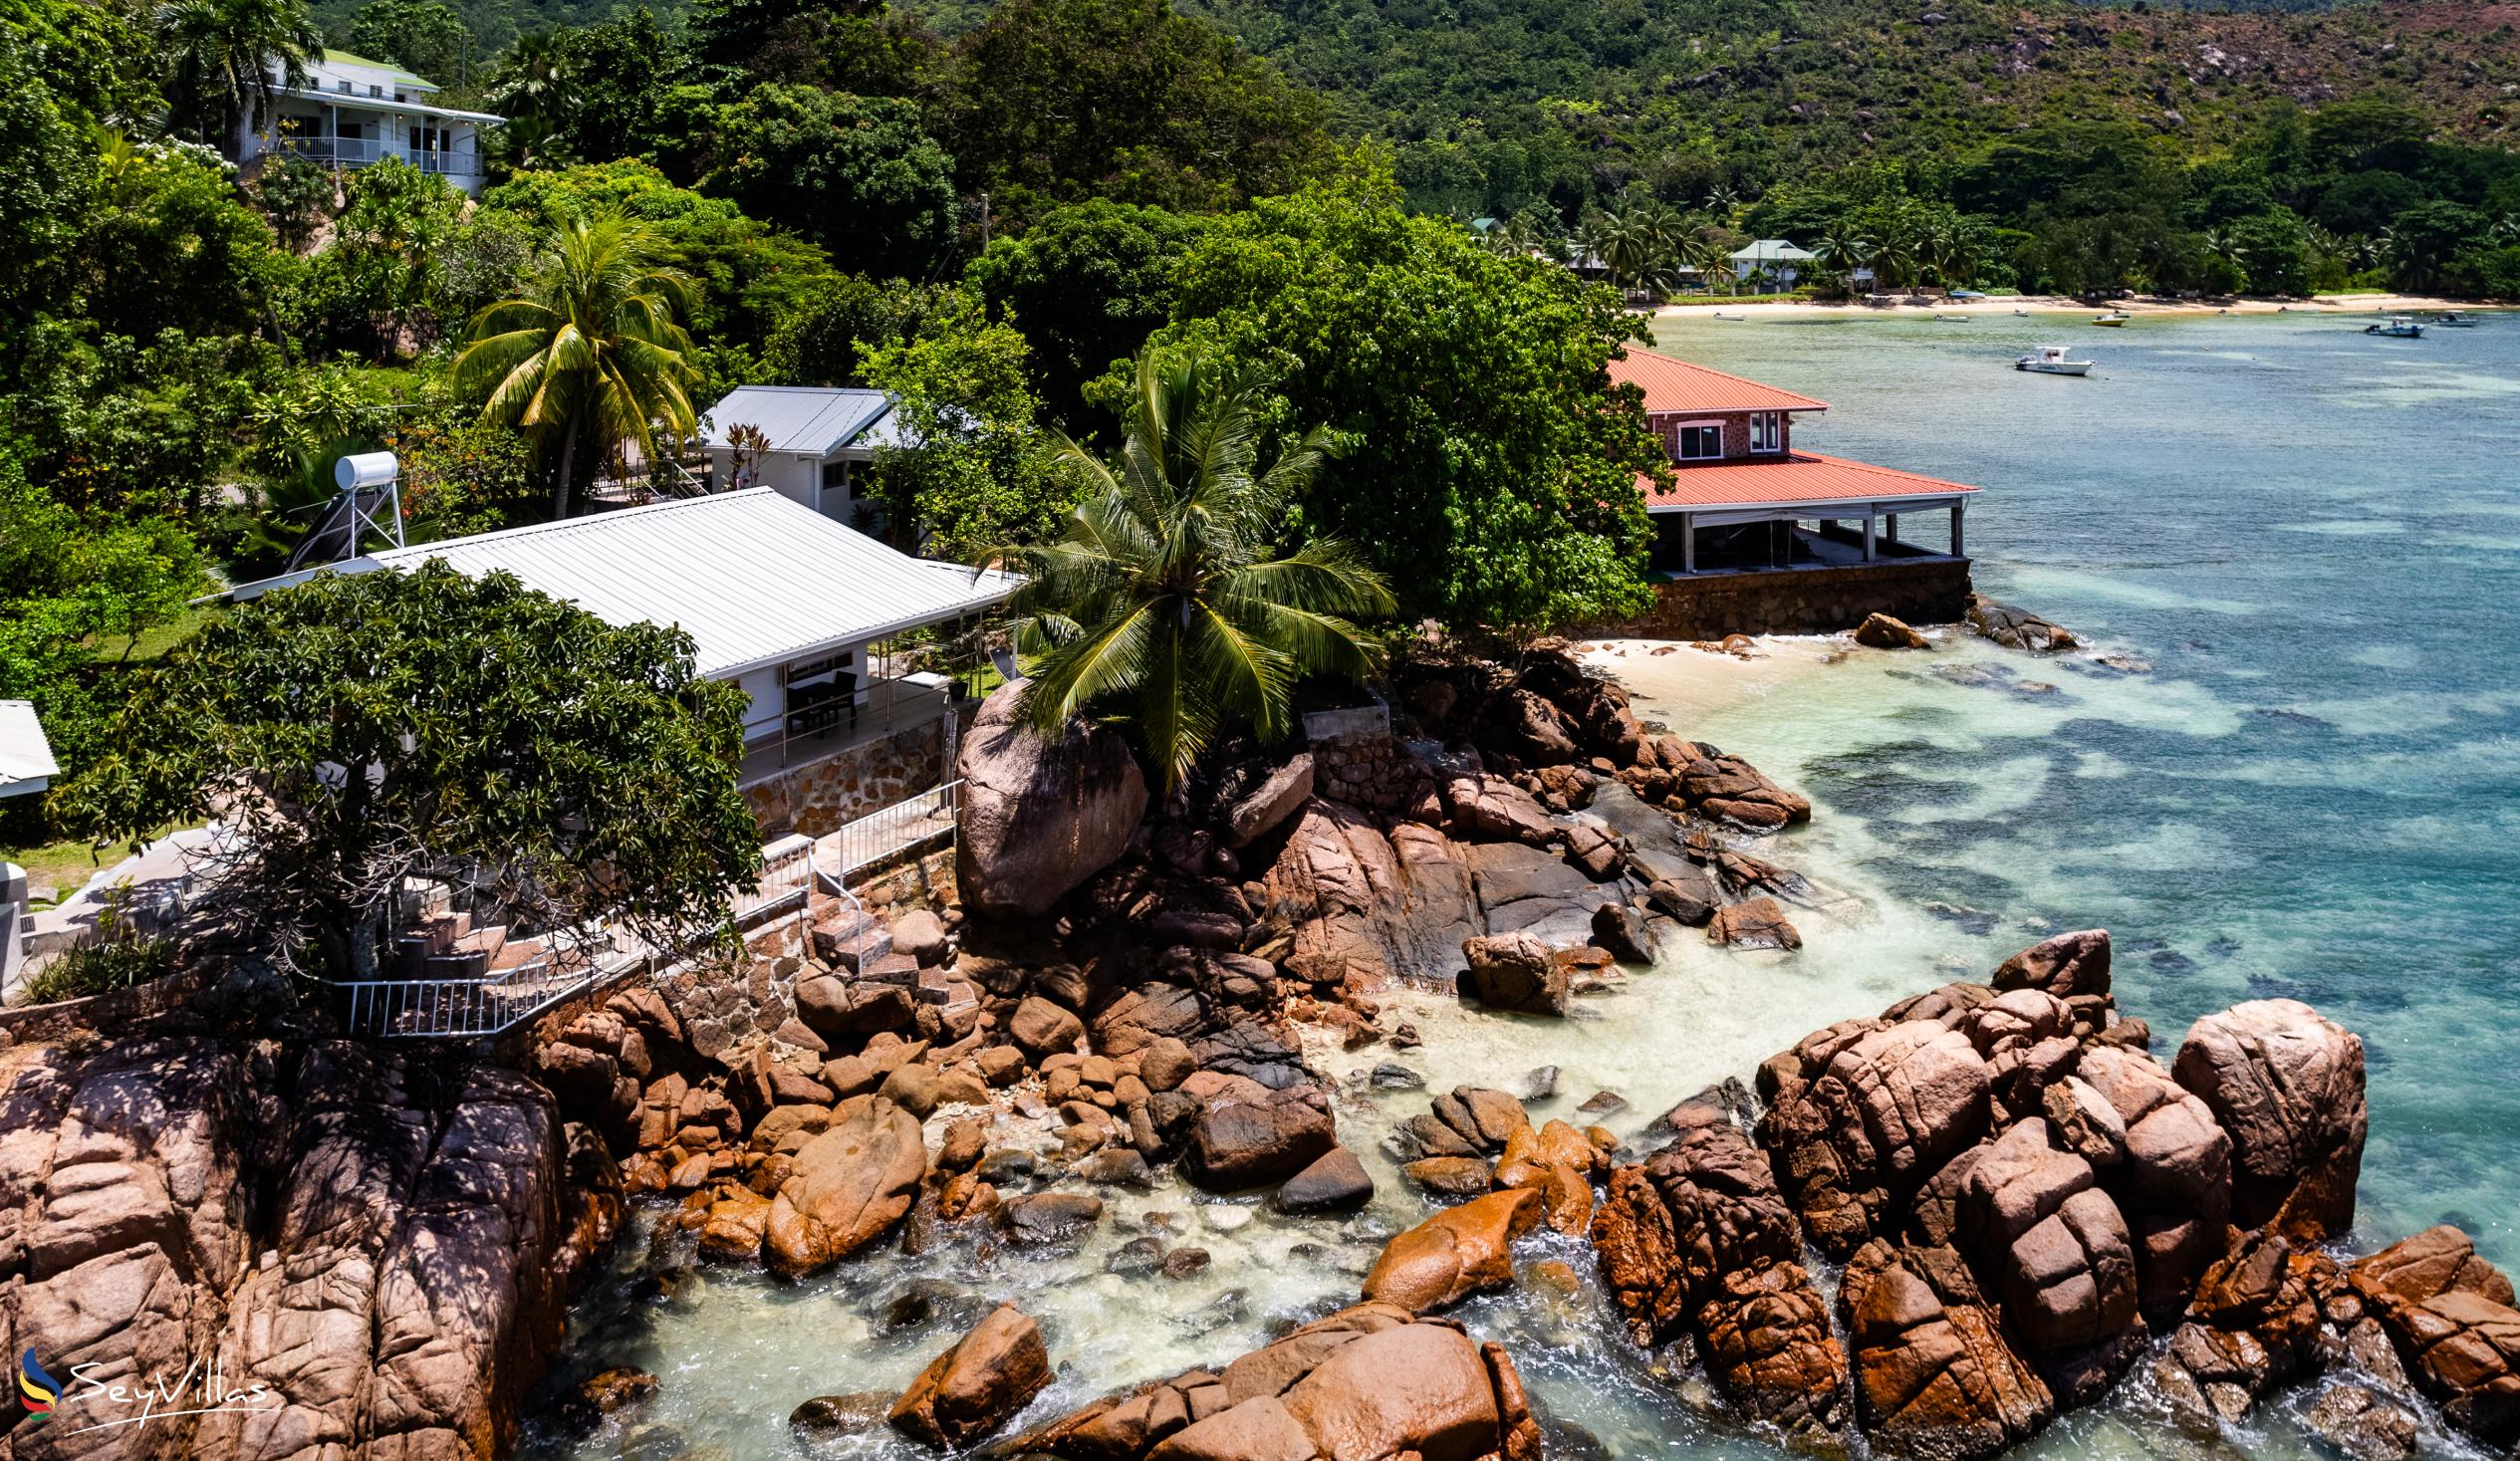 Photo 5: Coin D'Or - Outdoor area - Praslin (Seychelles)